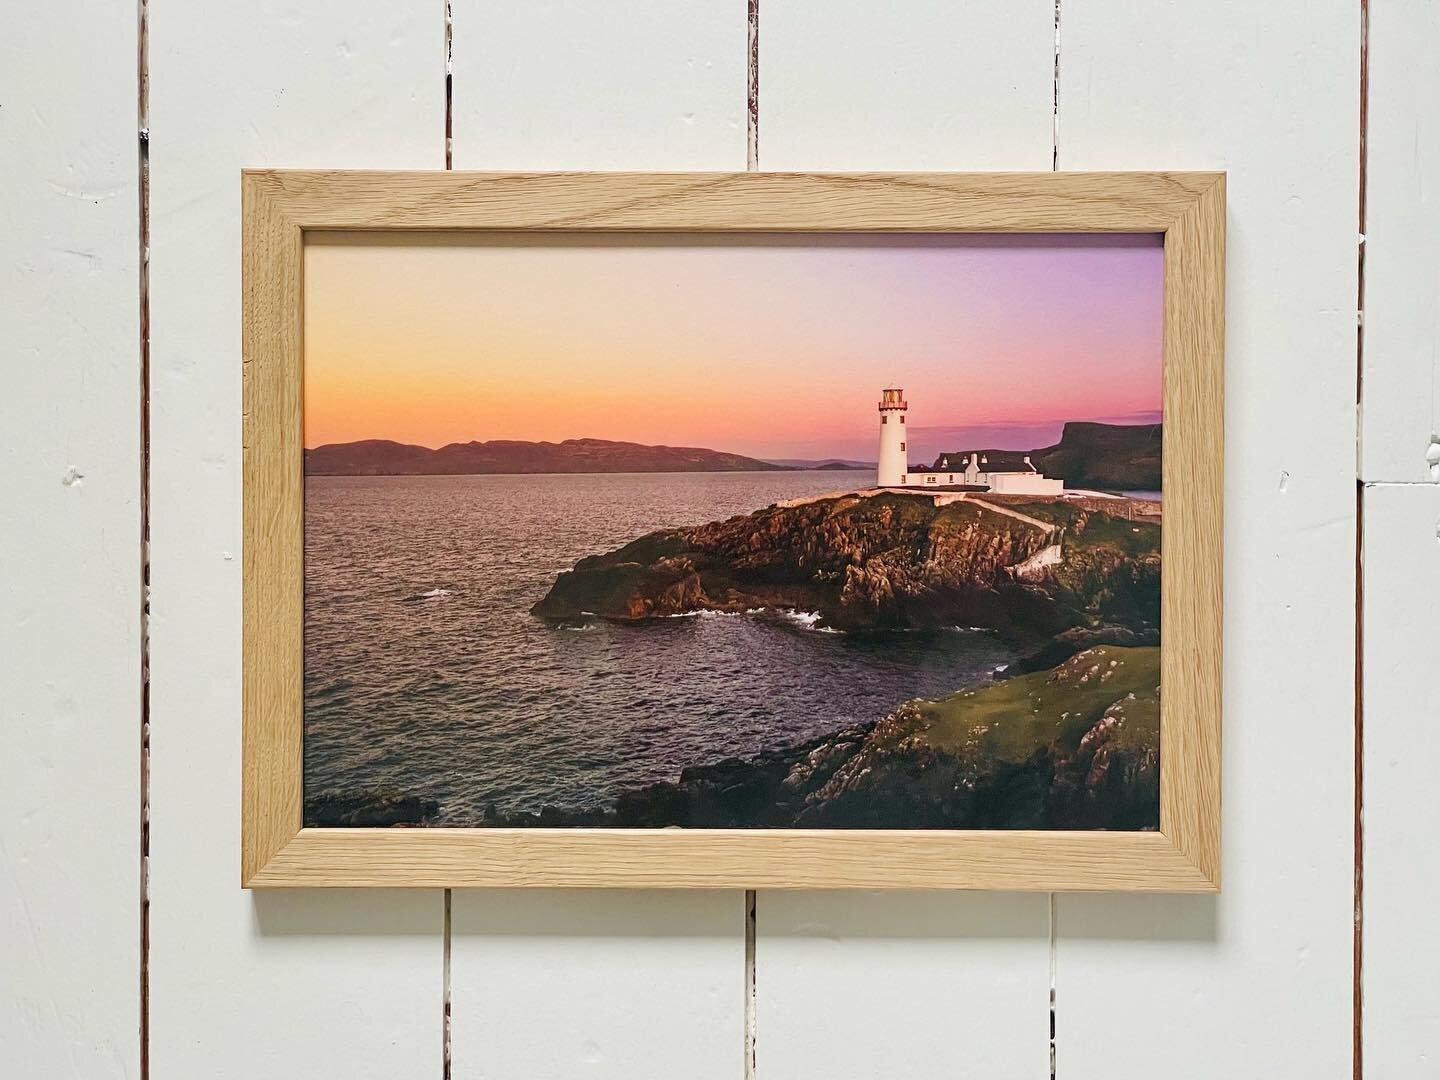 Fanad Lighthouse 
.
.
.
.
.
.

#fineartprints #fanadlighthouse #fineartphotography #artprints #wallart #photography #prints #art #photographicart #gallerywall #gallerywallart #irishart #photoprints #travelphotography #landscapephotography #printshop 